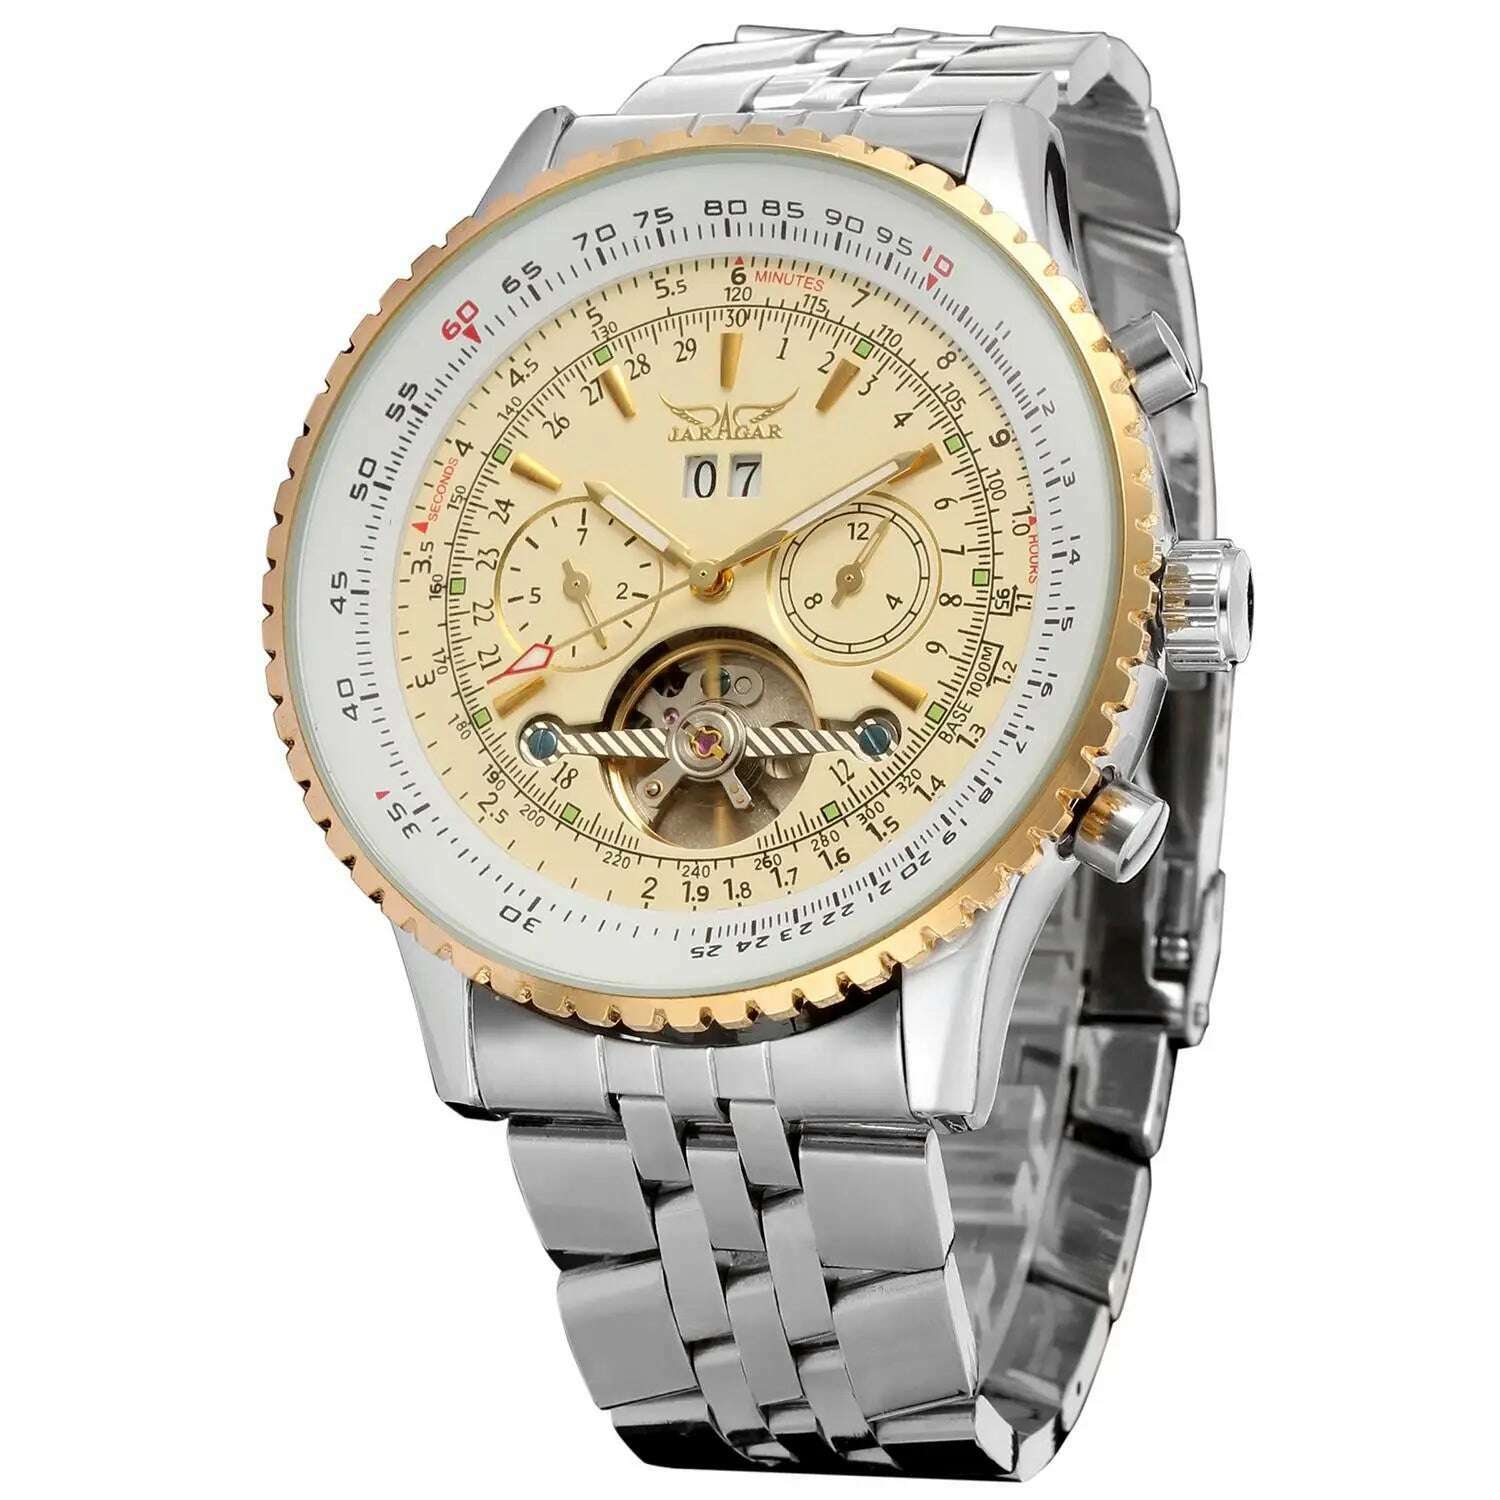 KIMLUD, 2019 Jaragar Top Brand Mens Watches Luxury Men Military Sport Wristwatch Automatic Mechanical Tourbillon Clock Relogio Masculino, Gold Gold, KIMLUD Women's Clothes